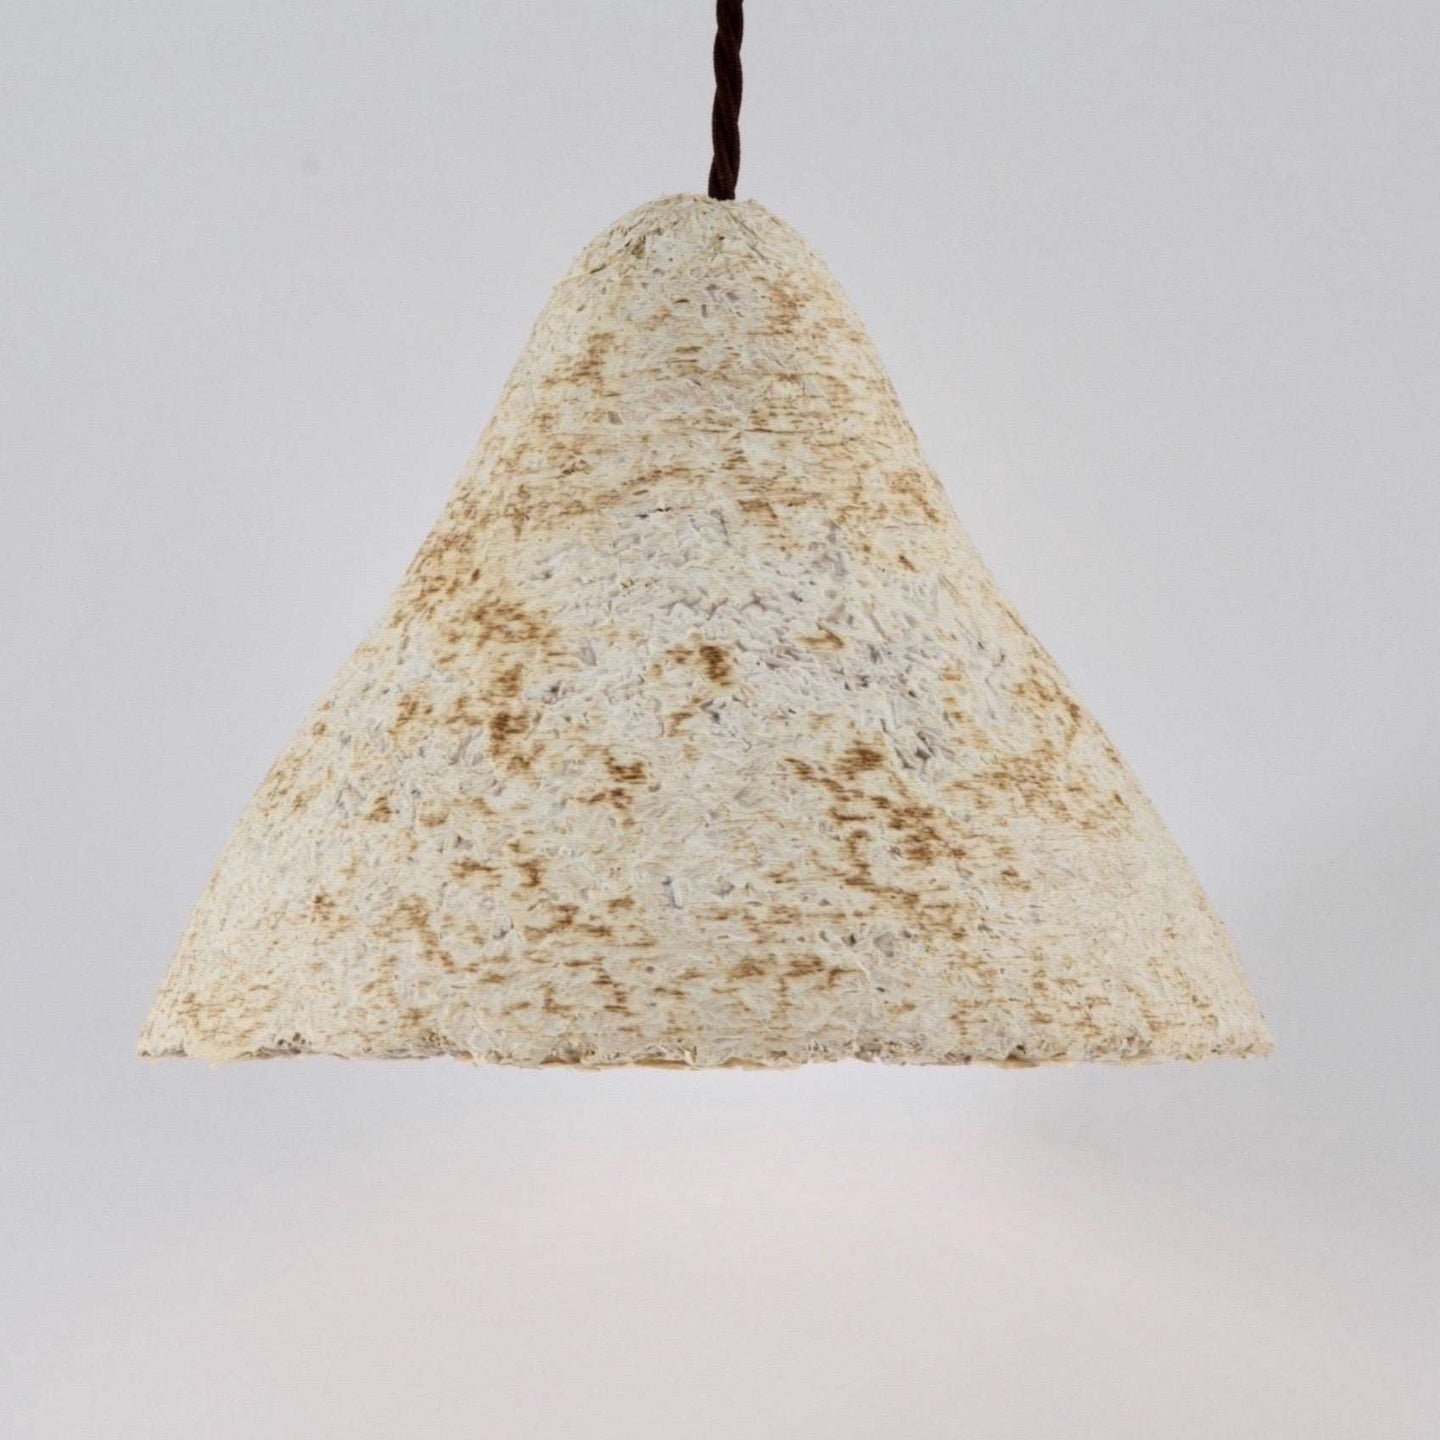 Myceliated Pendant Light | wood waste myceliated with mushroom spawn - THE HOME OF SUSTAINABLE THINGS